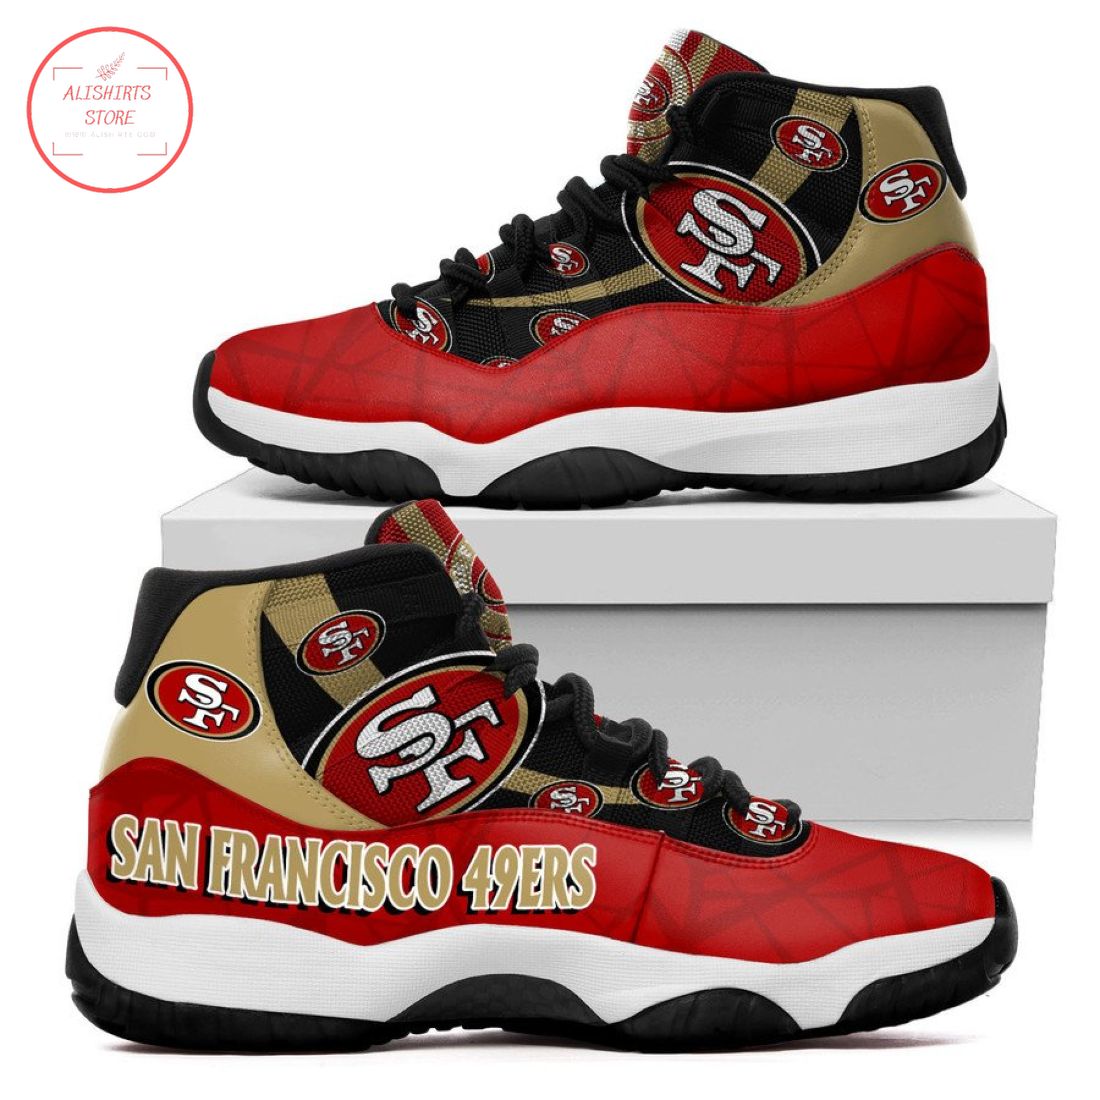 NFL San Francisco 49ers New Air Jordan 11 Sneakers Shoes